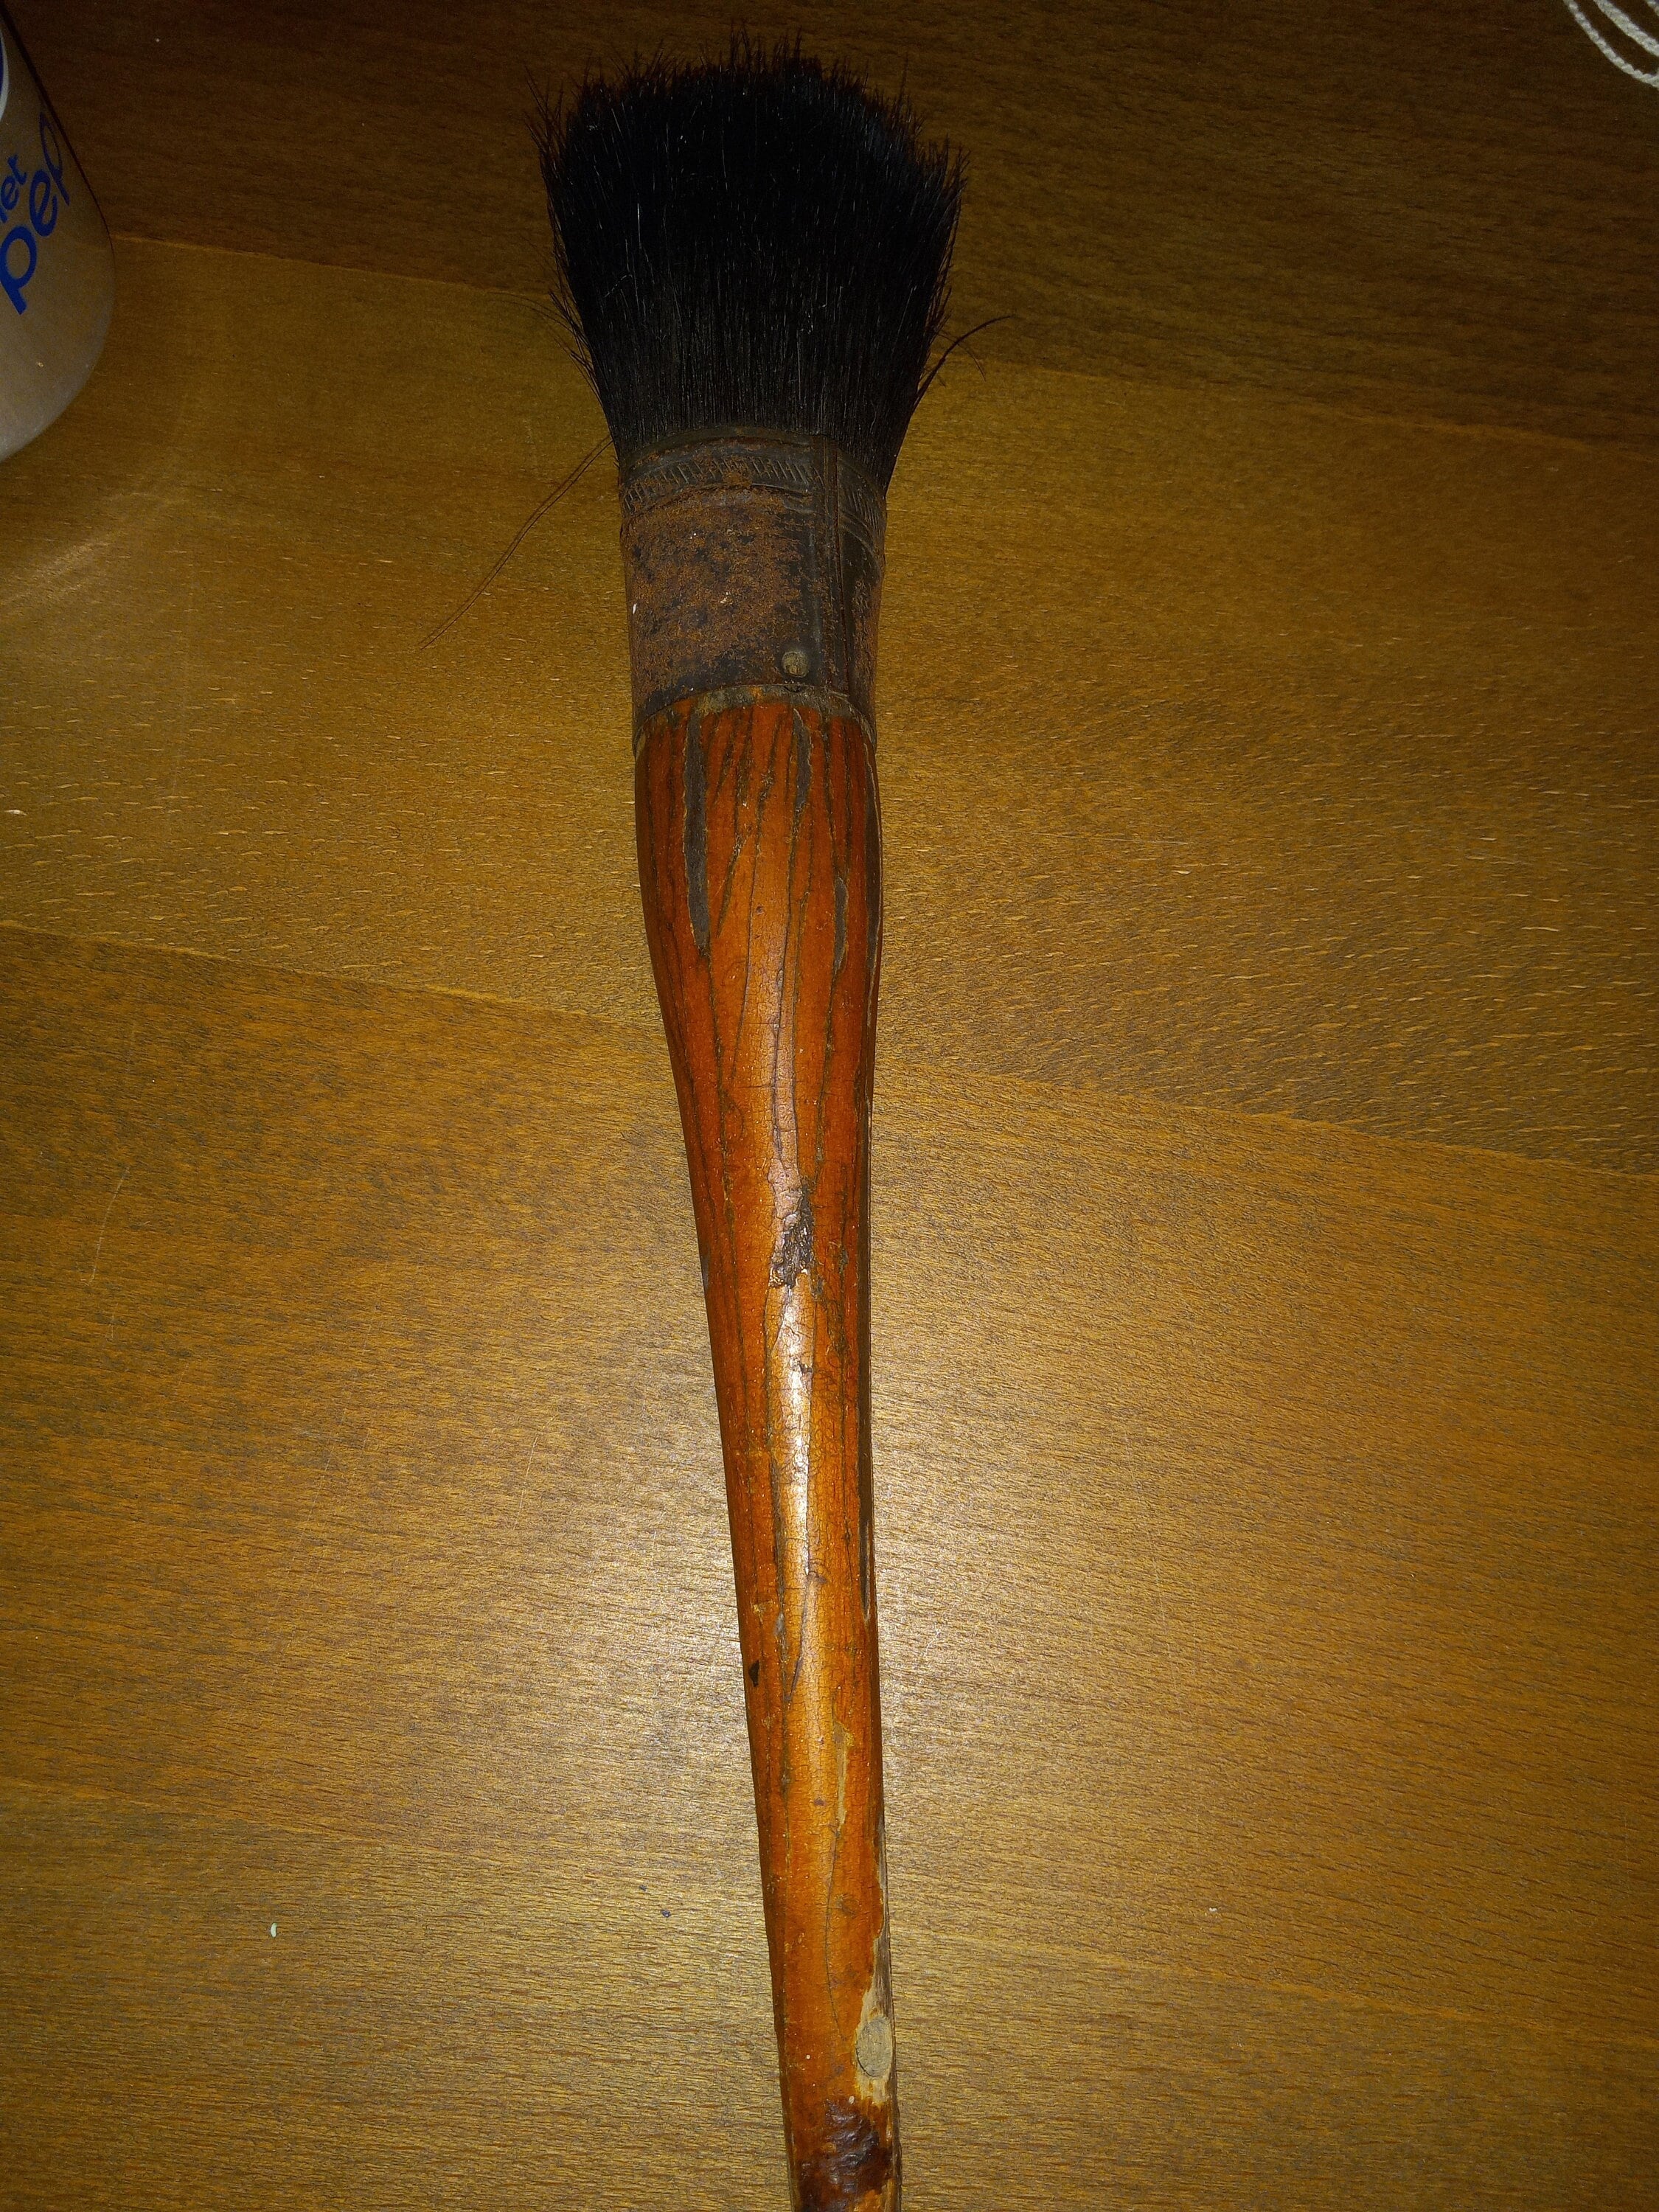 1 French Wood Paint Brush, Industrial Decor, Round Brush, Wood